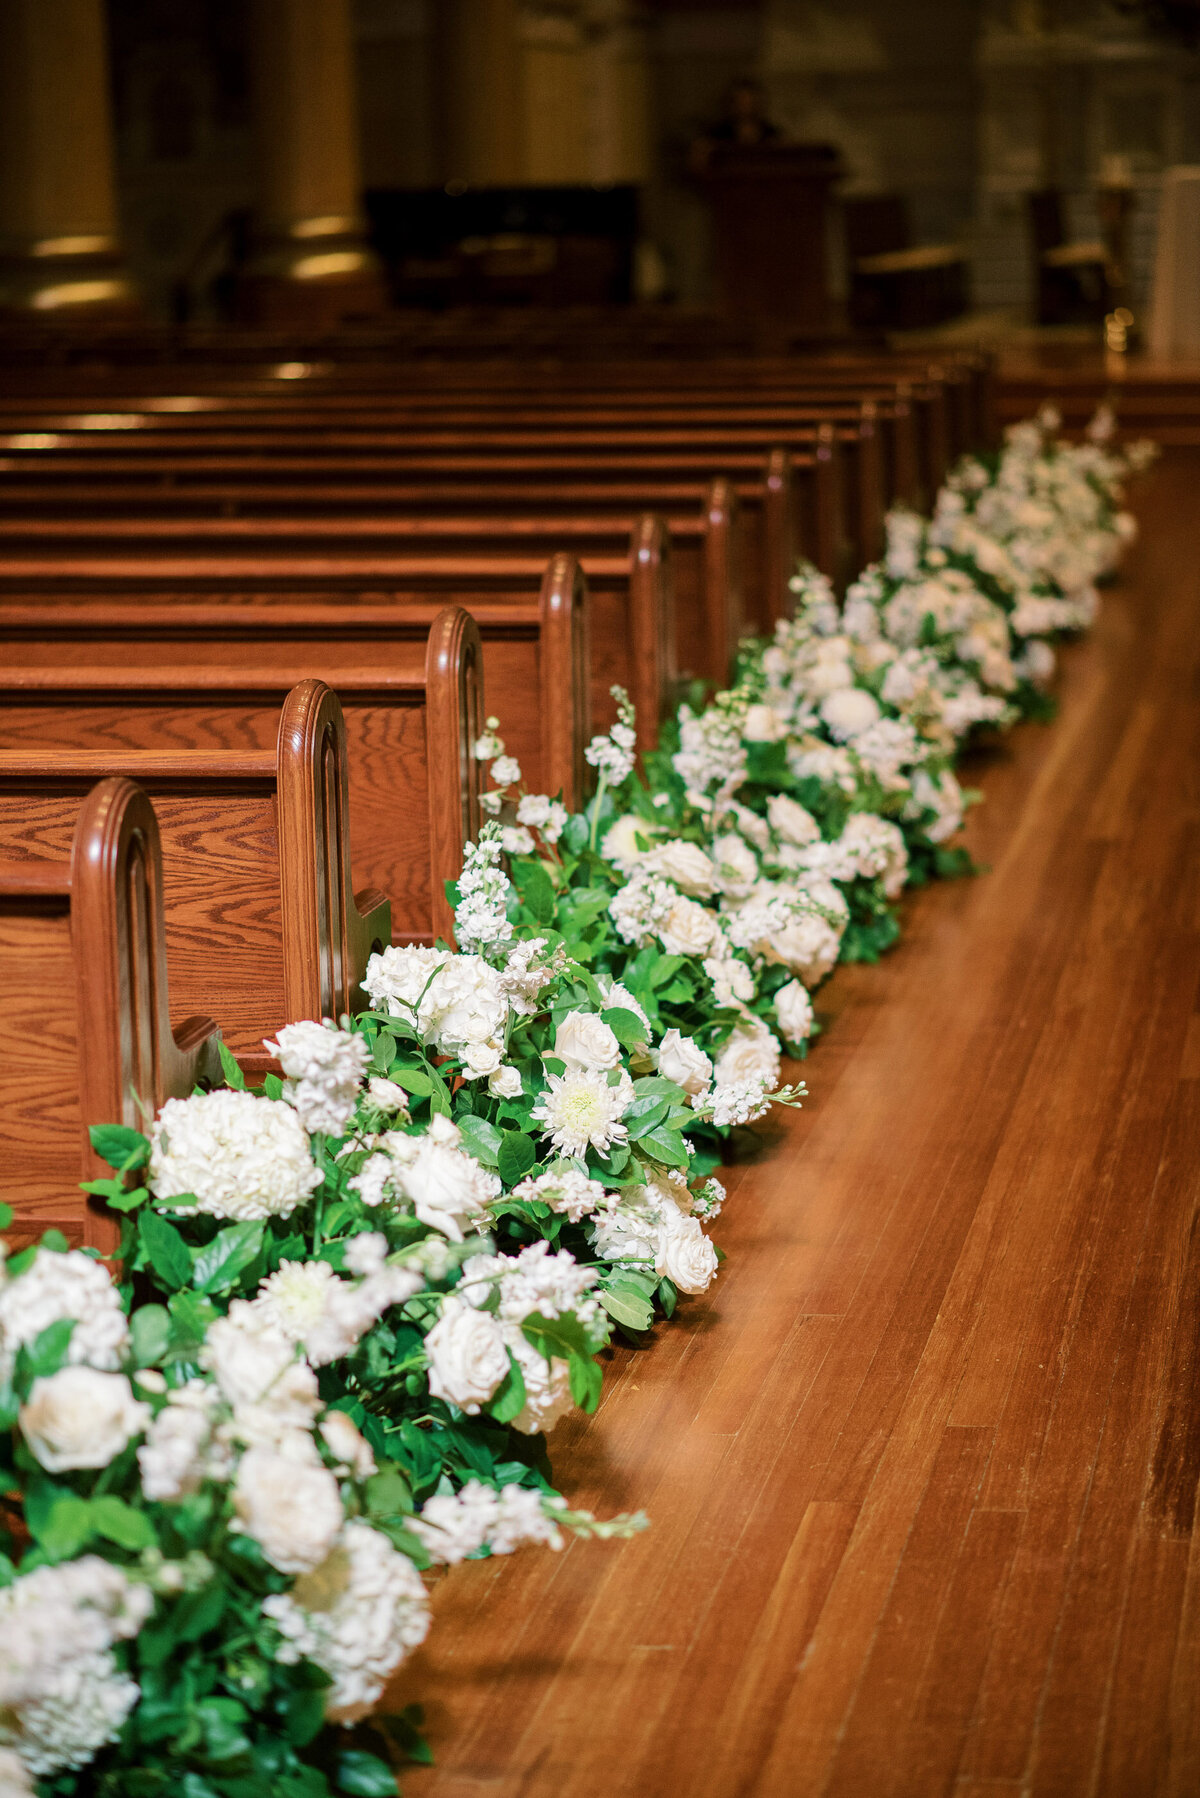 Kate-Murtaugh-Events-Boston-wedding-planner-rose-ceremony-aisle-flowers-Catholic-church